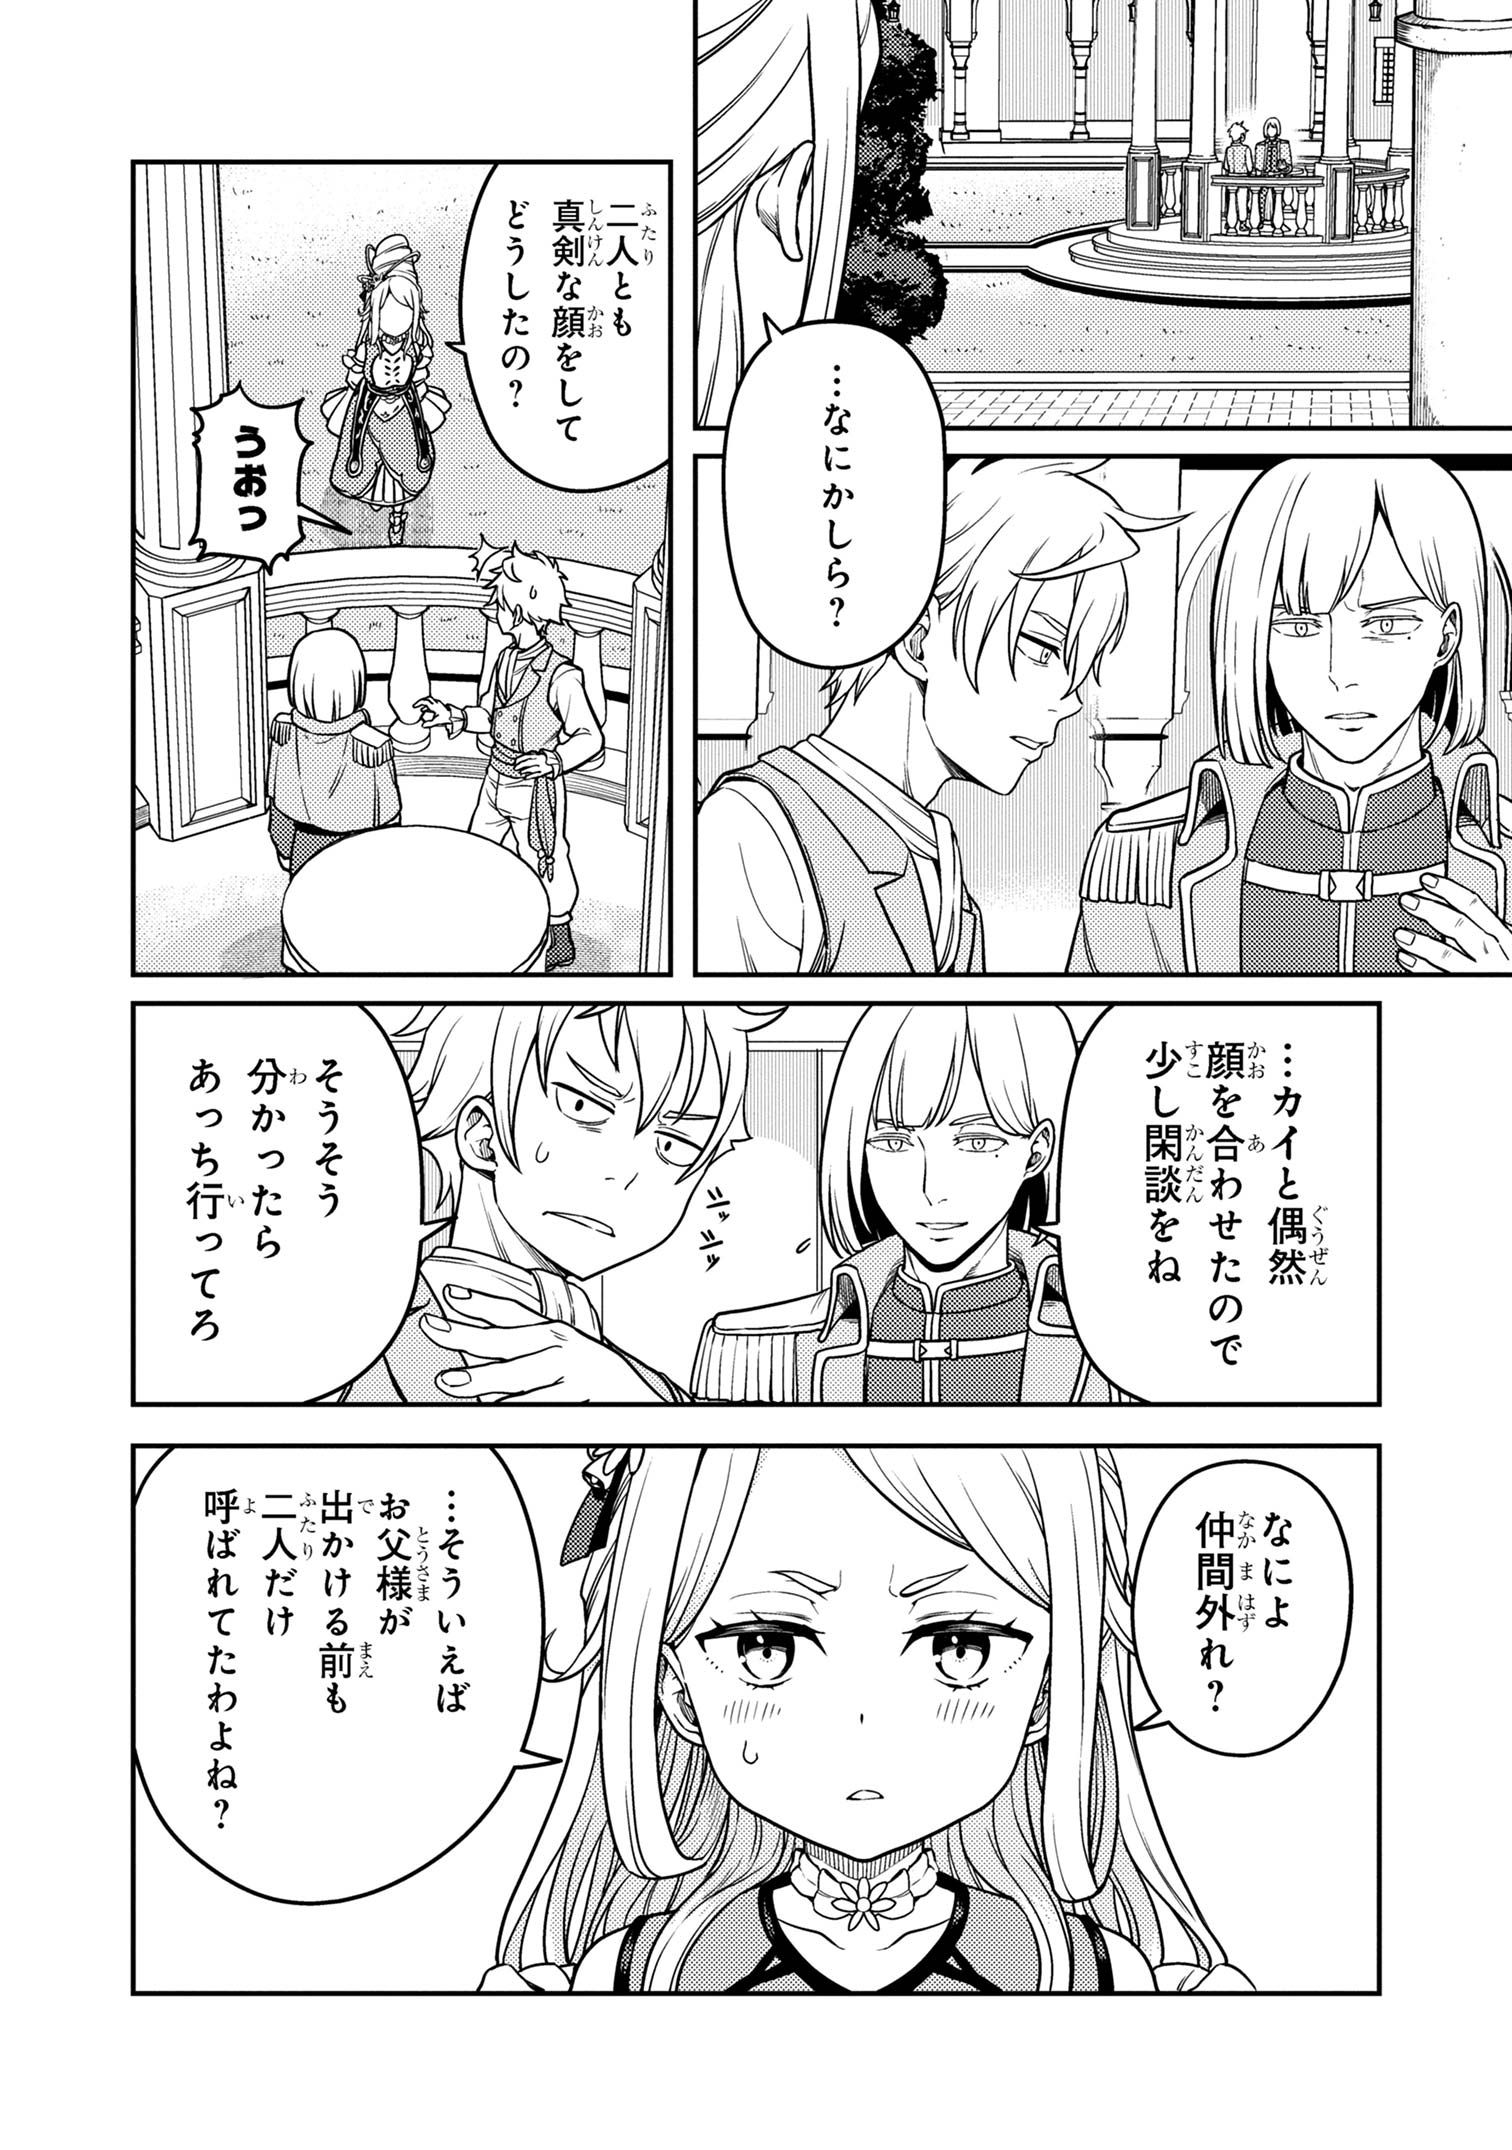 Sasaki to Pii-chan - Chapter 16.2 - Page 17